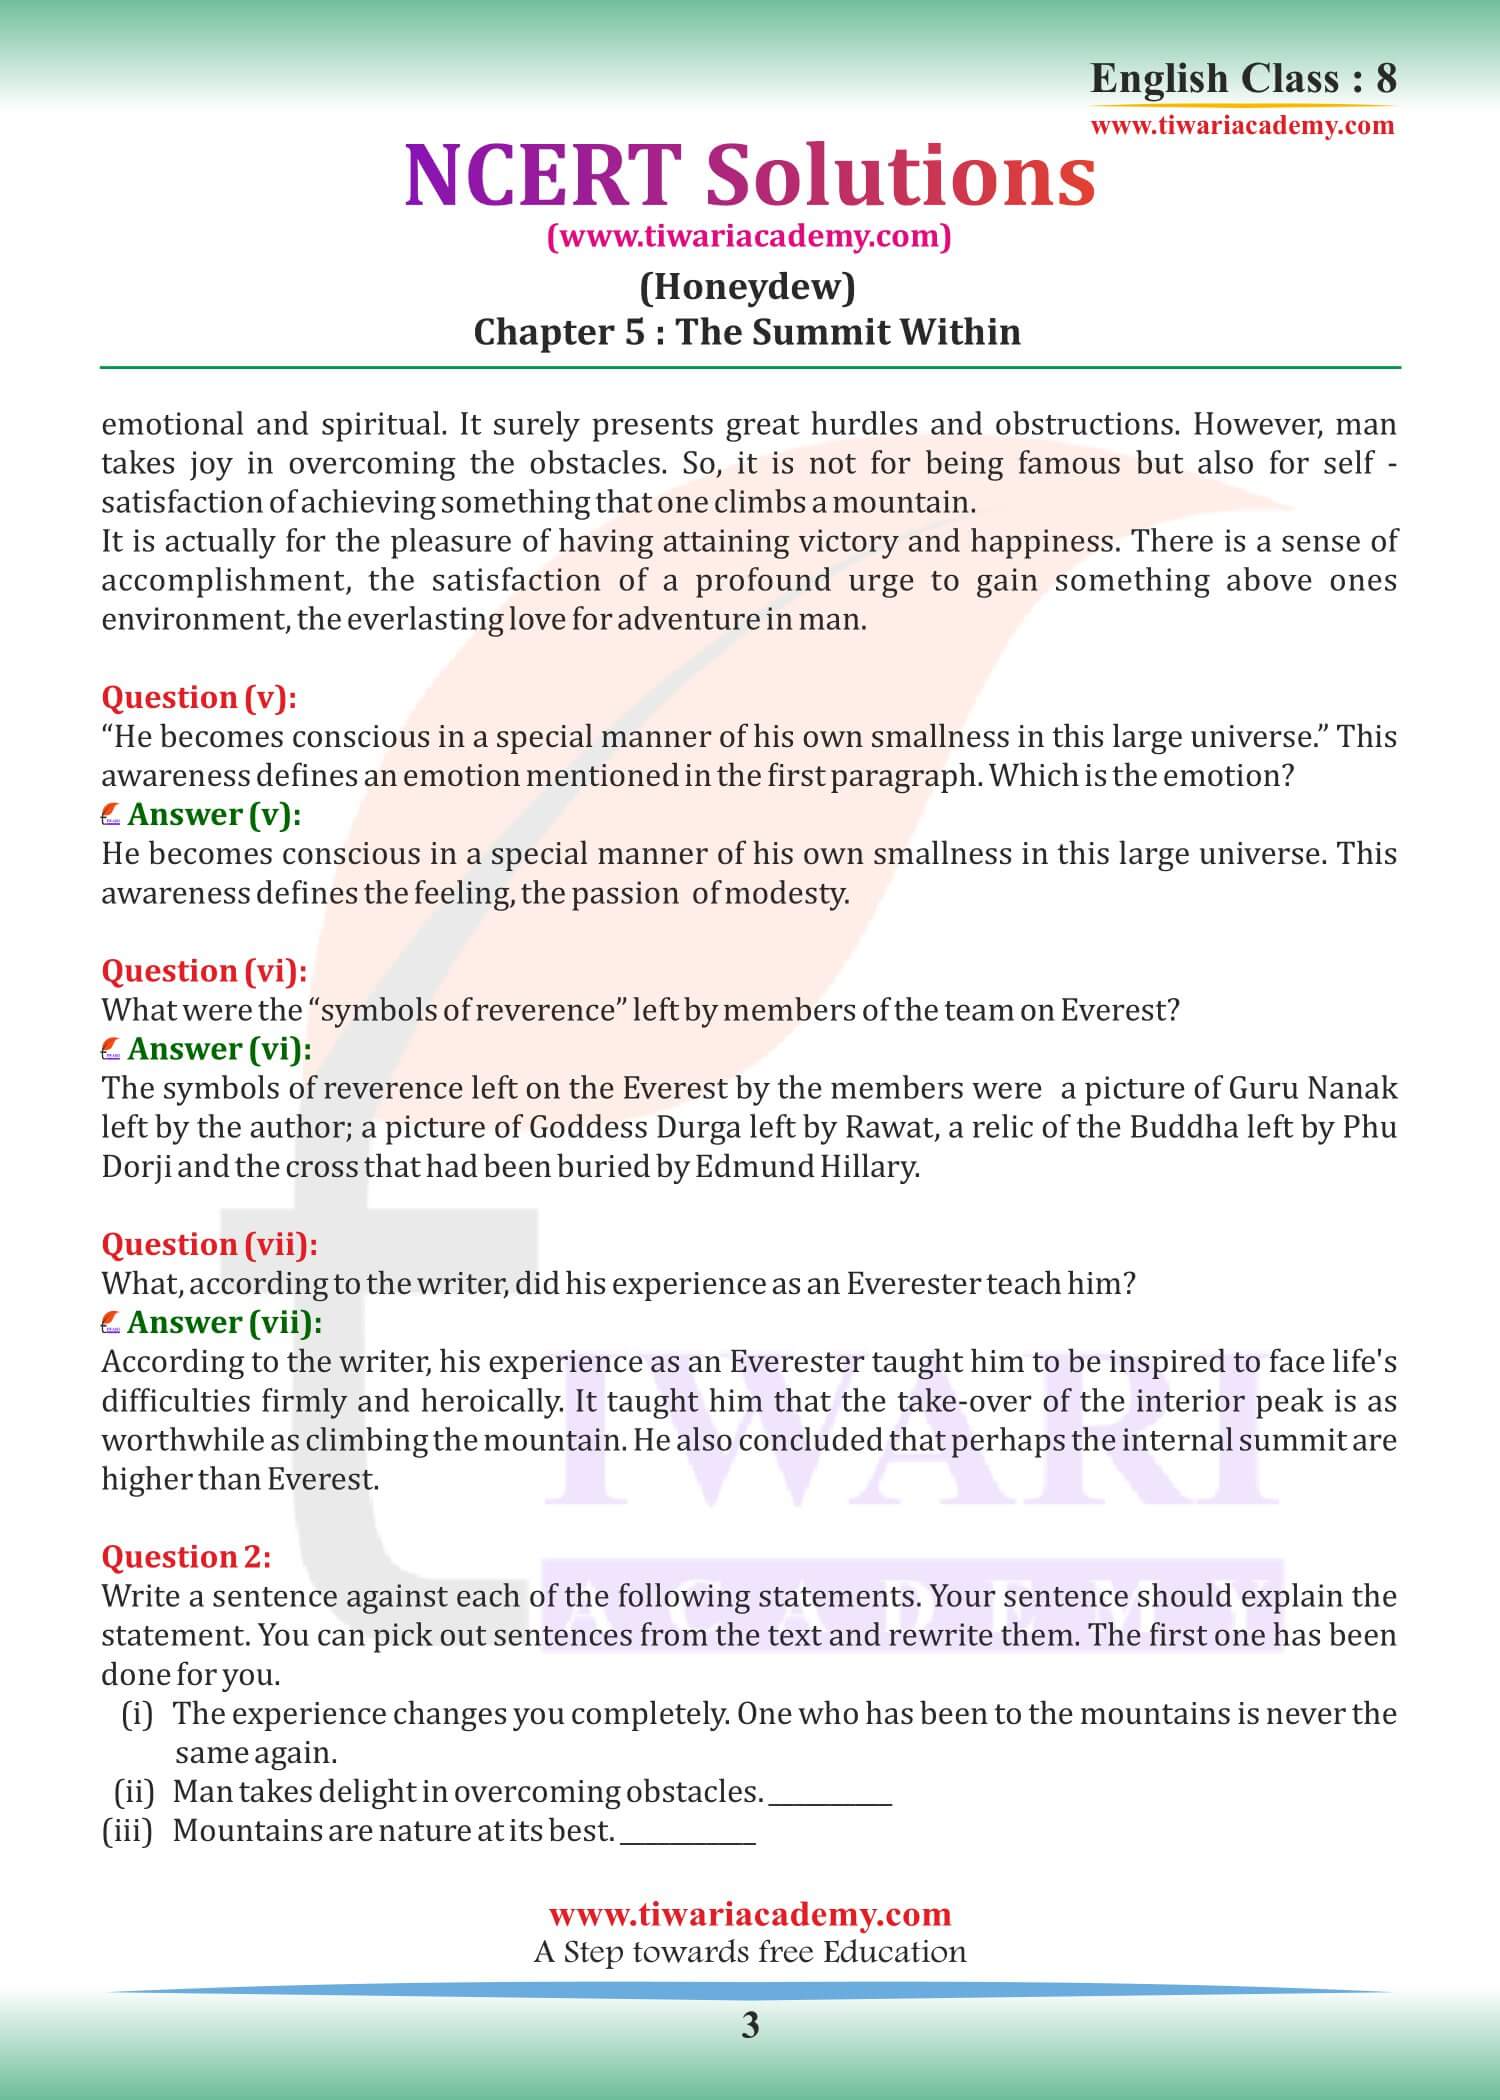 Class 8 English Honeydew Chapter 5 updated